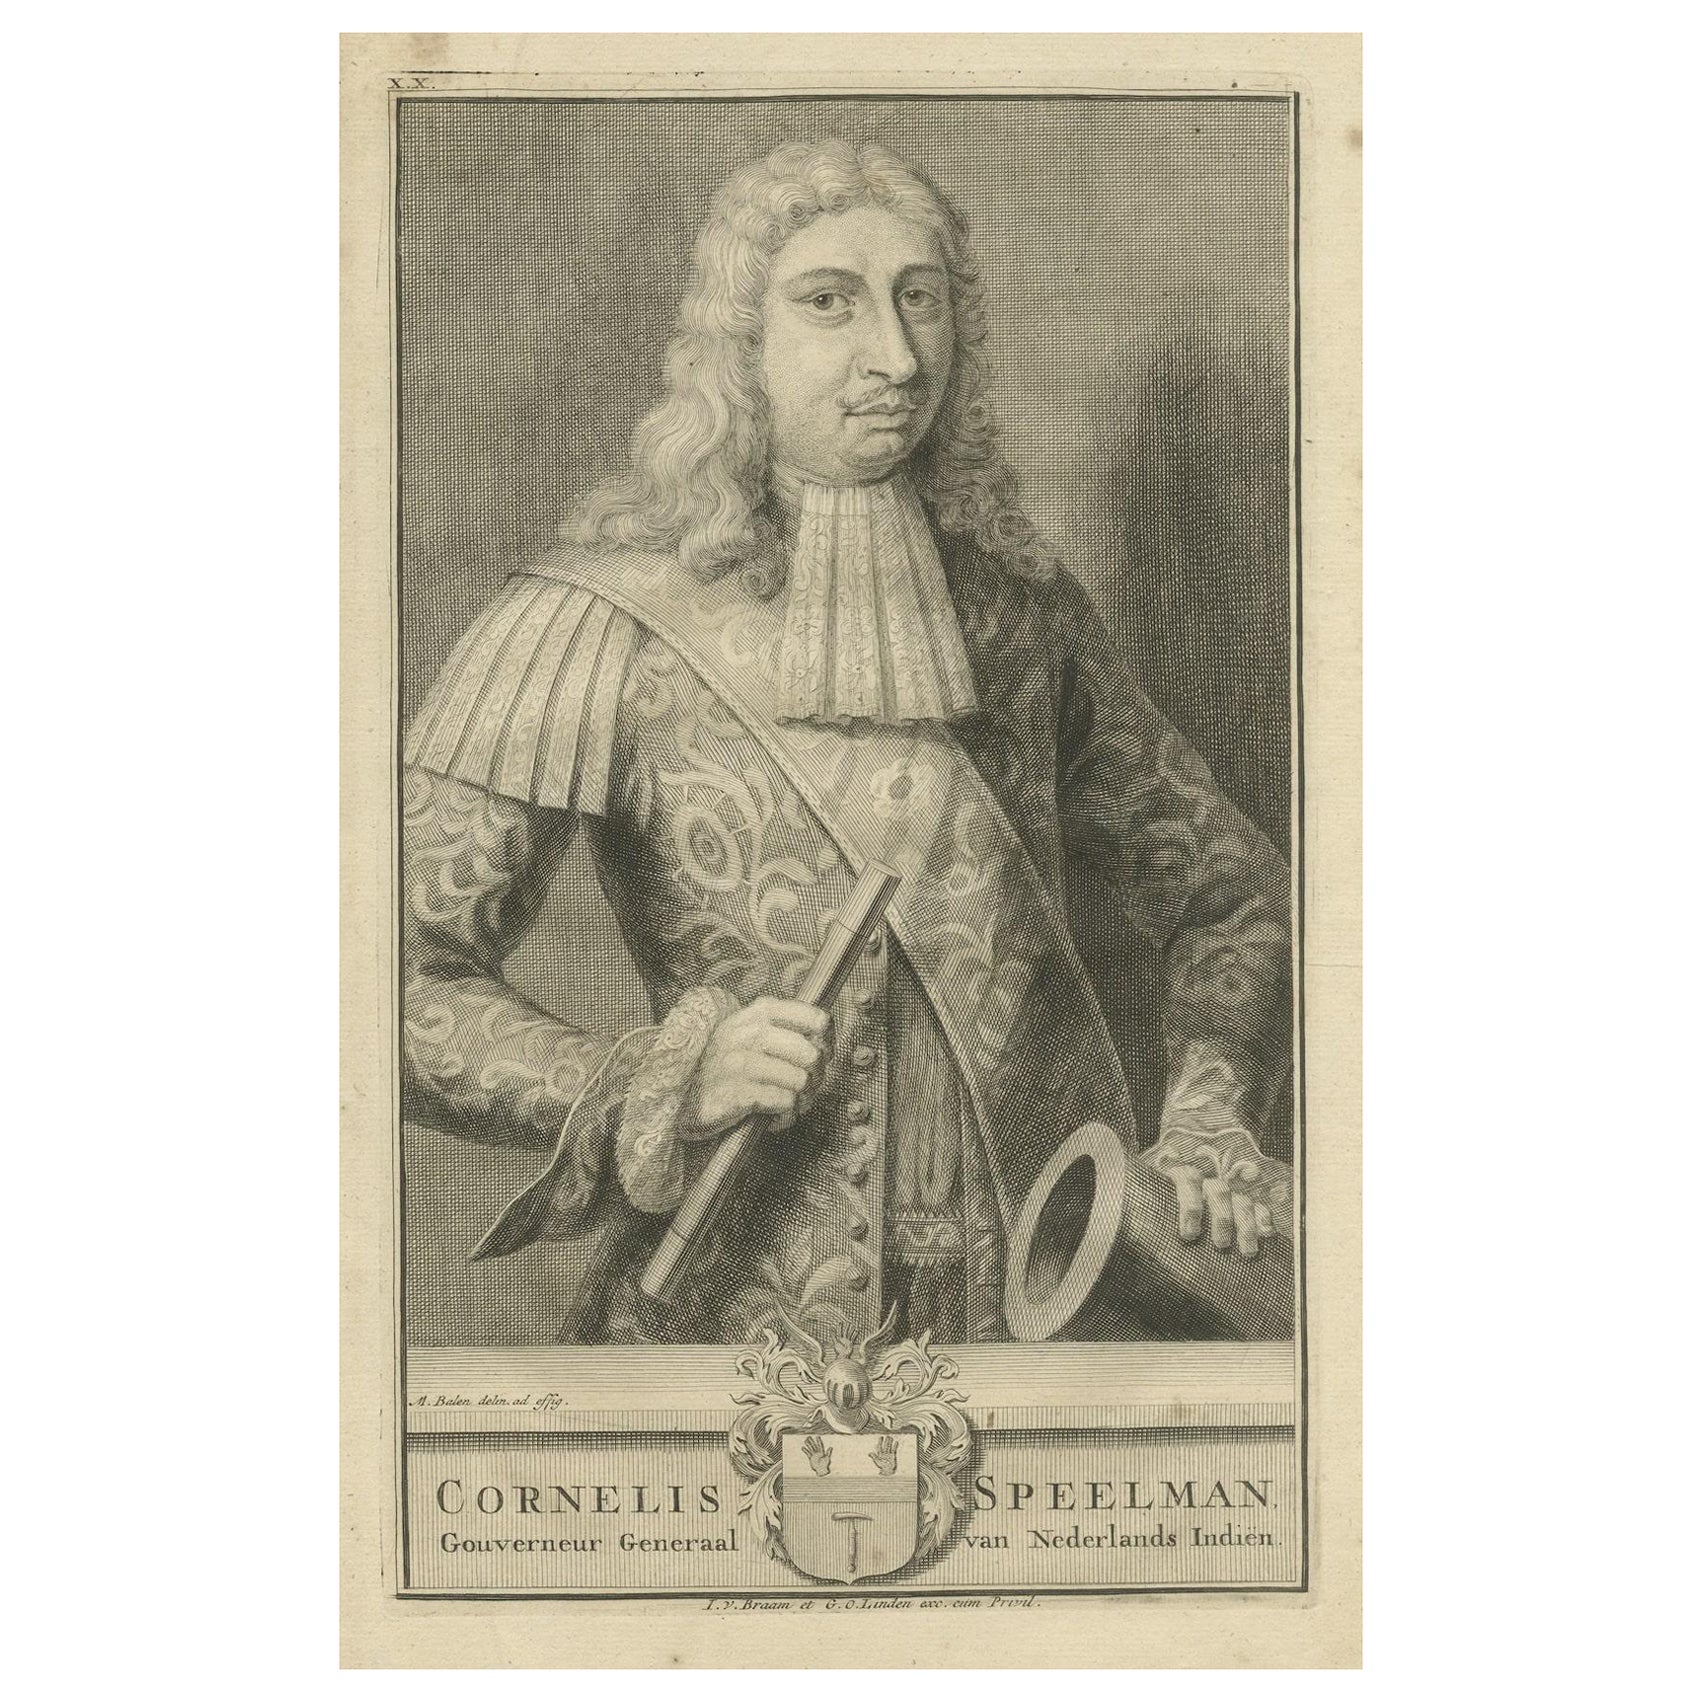 Cornelis Speelman: Commanding Governor-General of the VOC, Dutch East Indies